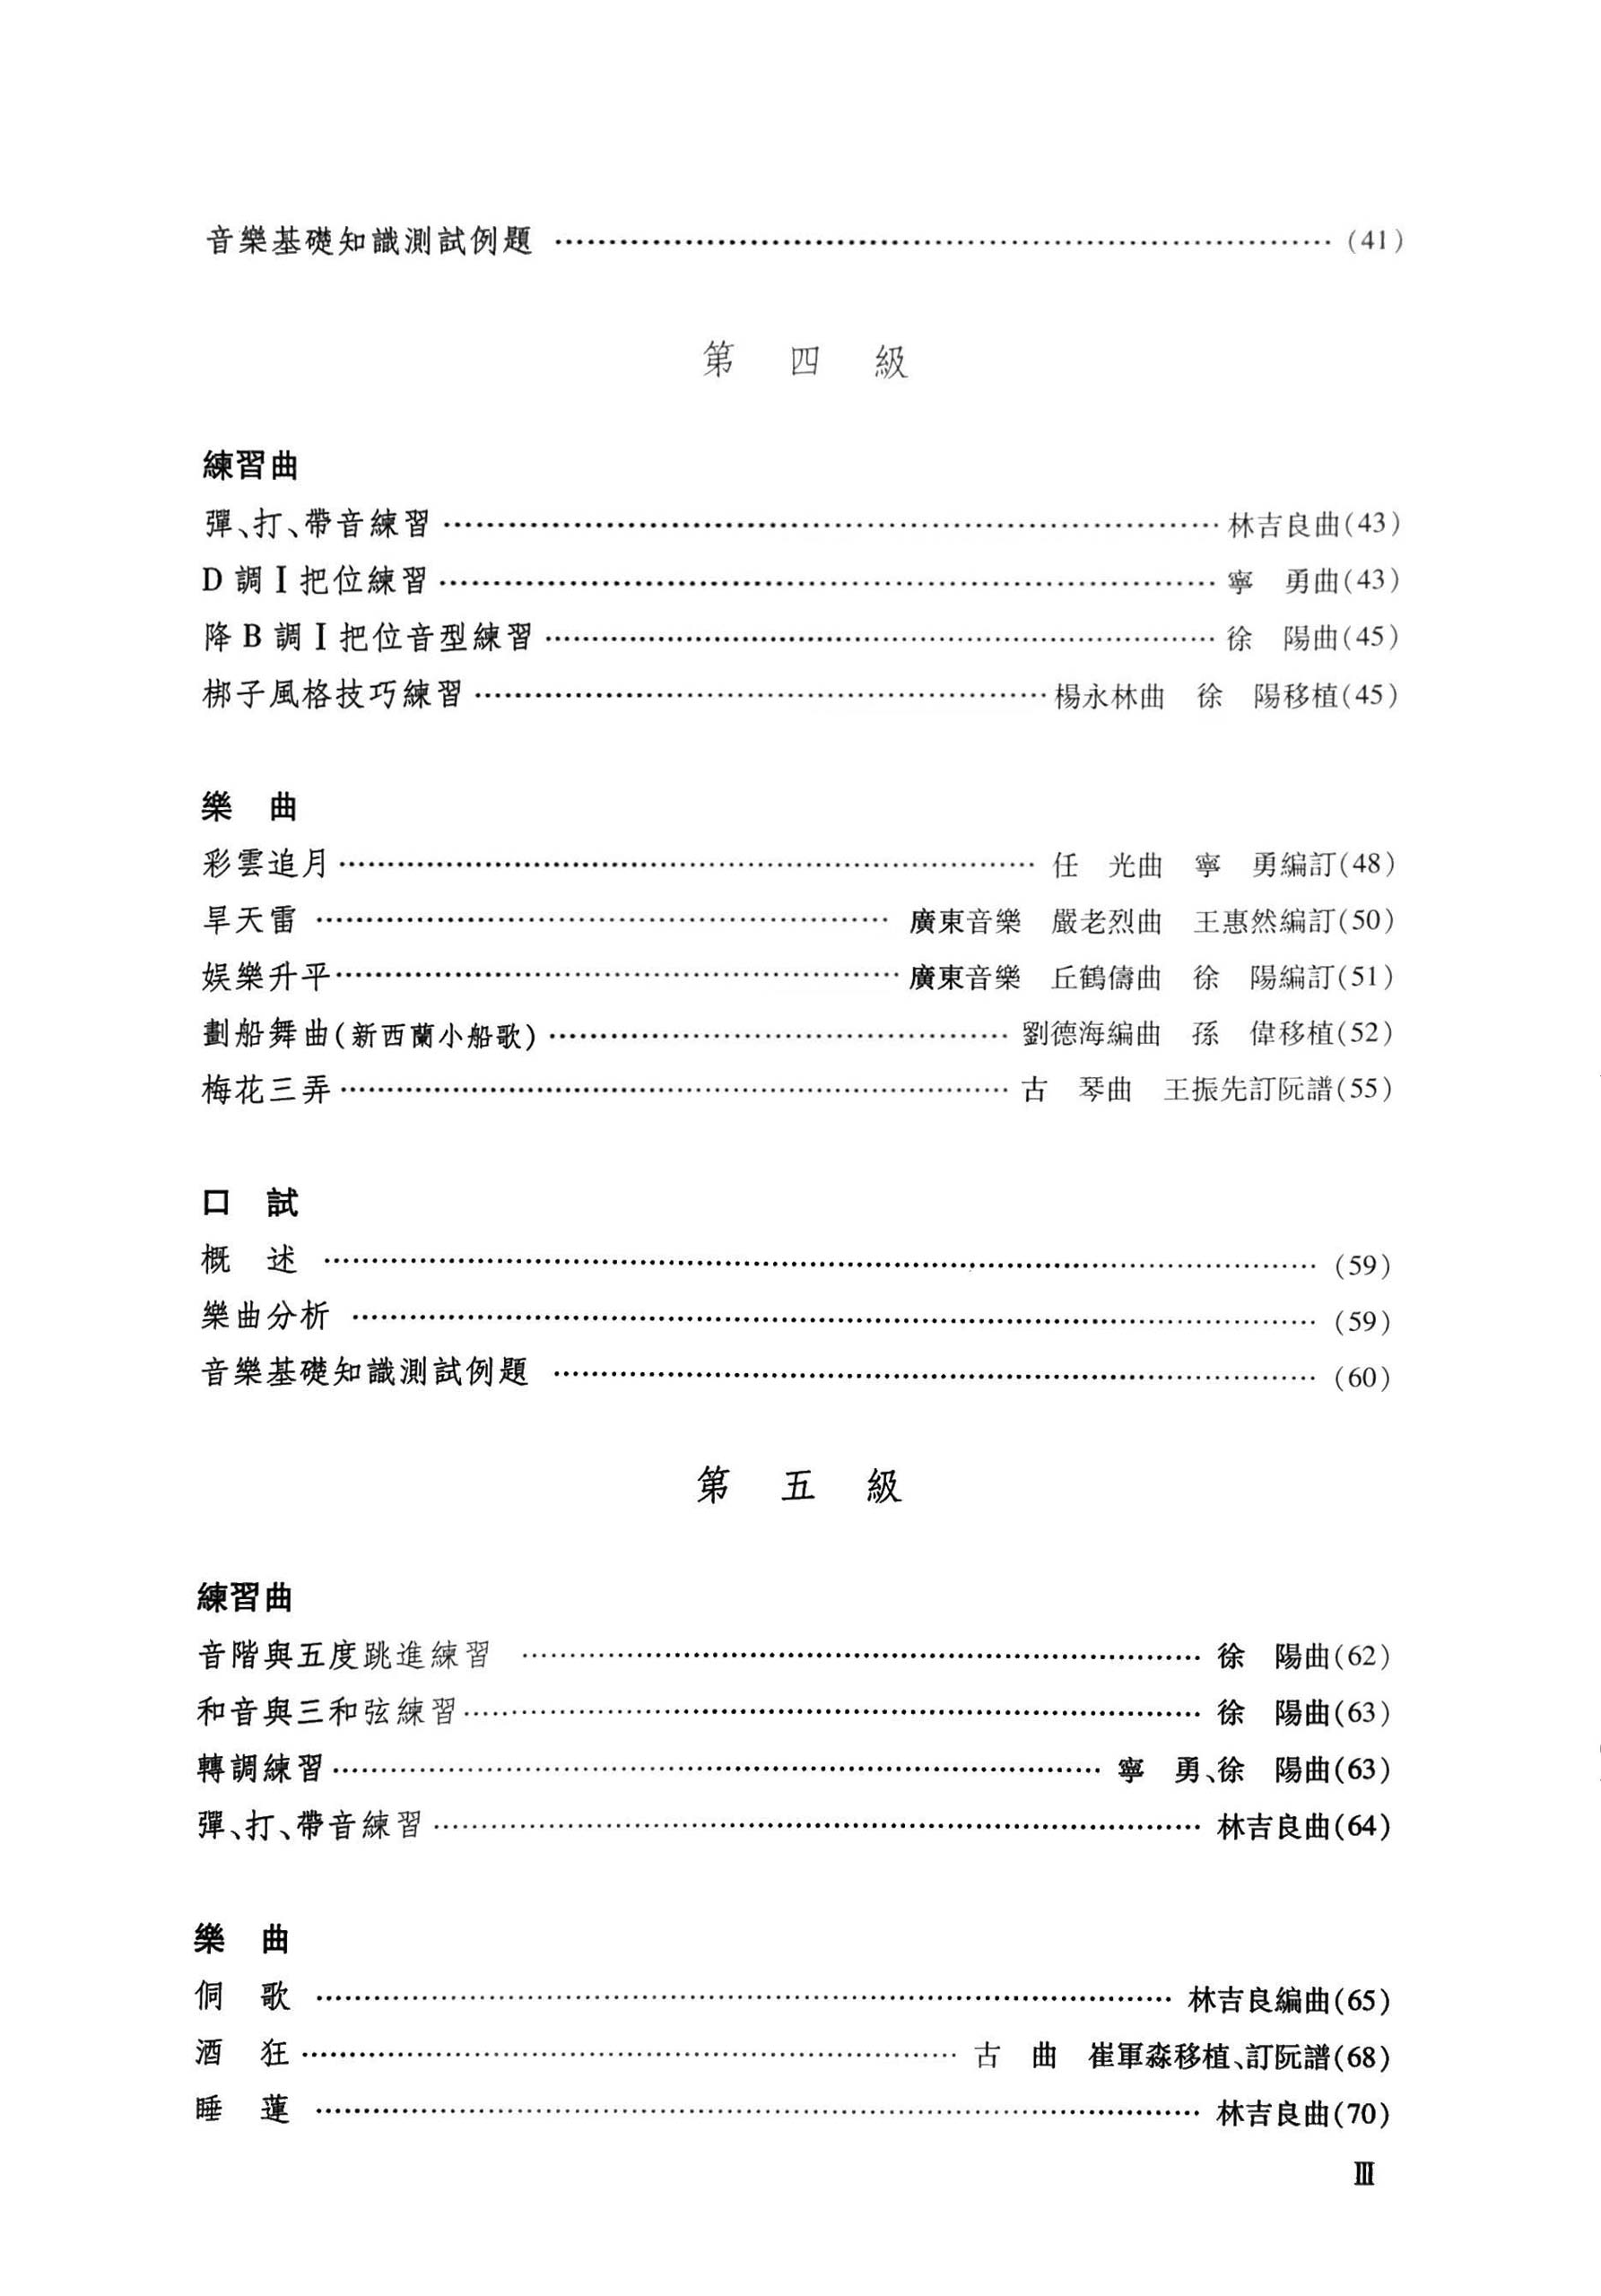 Zhongruan Grading Examination Book by CCOM – NAFA (Beginner Grade 1-6) Content Page 3